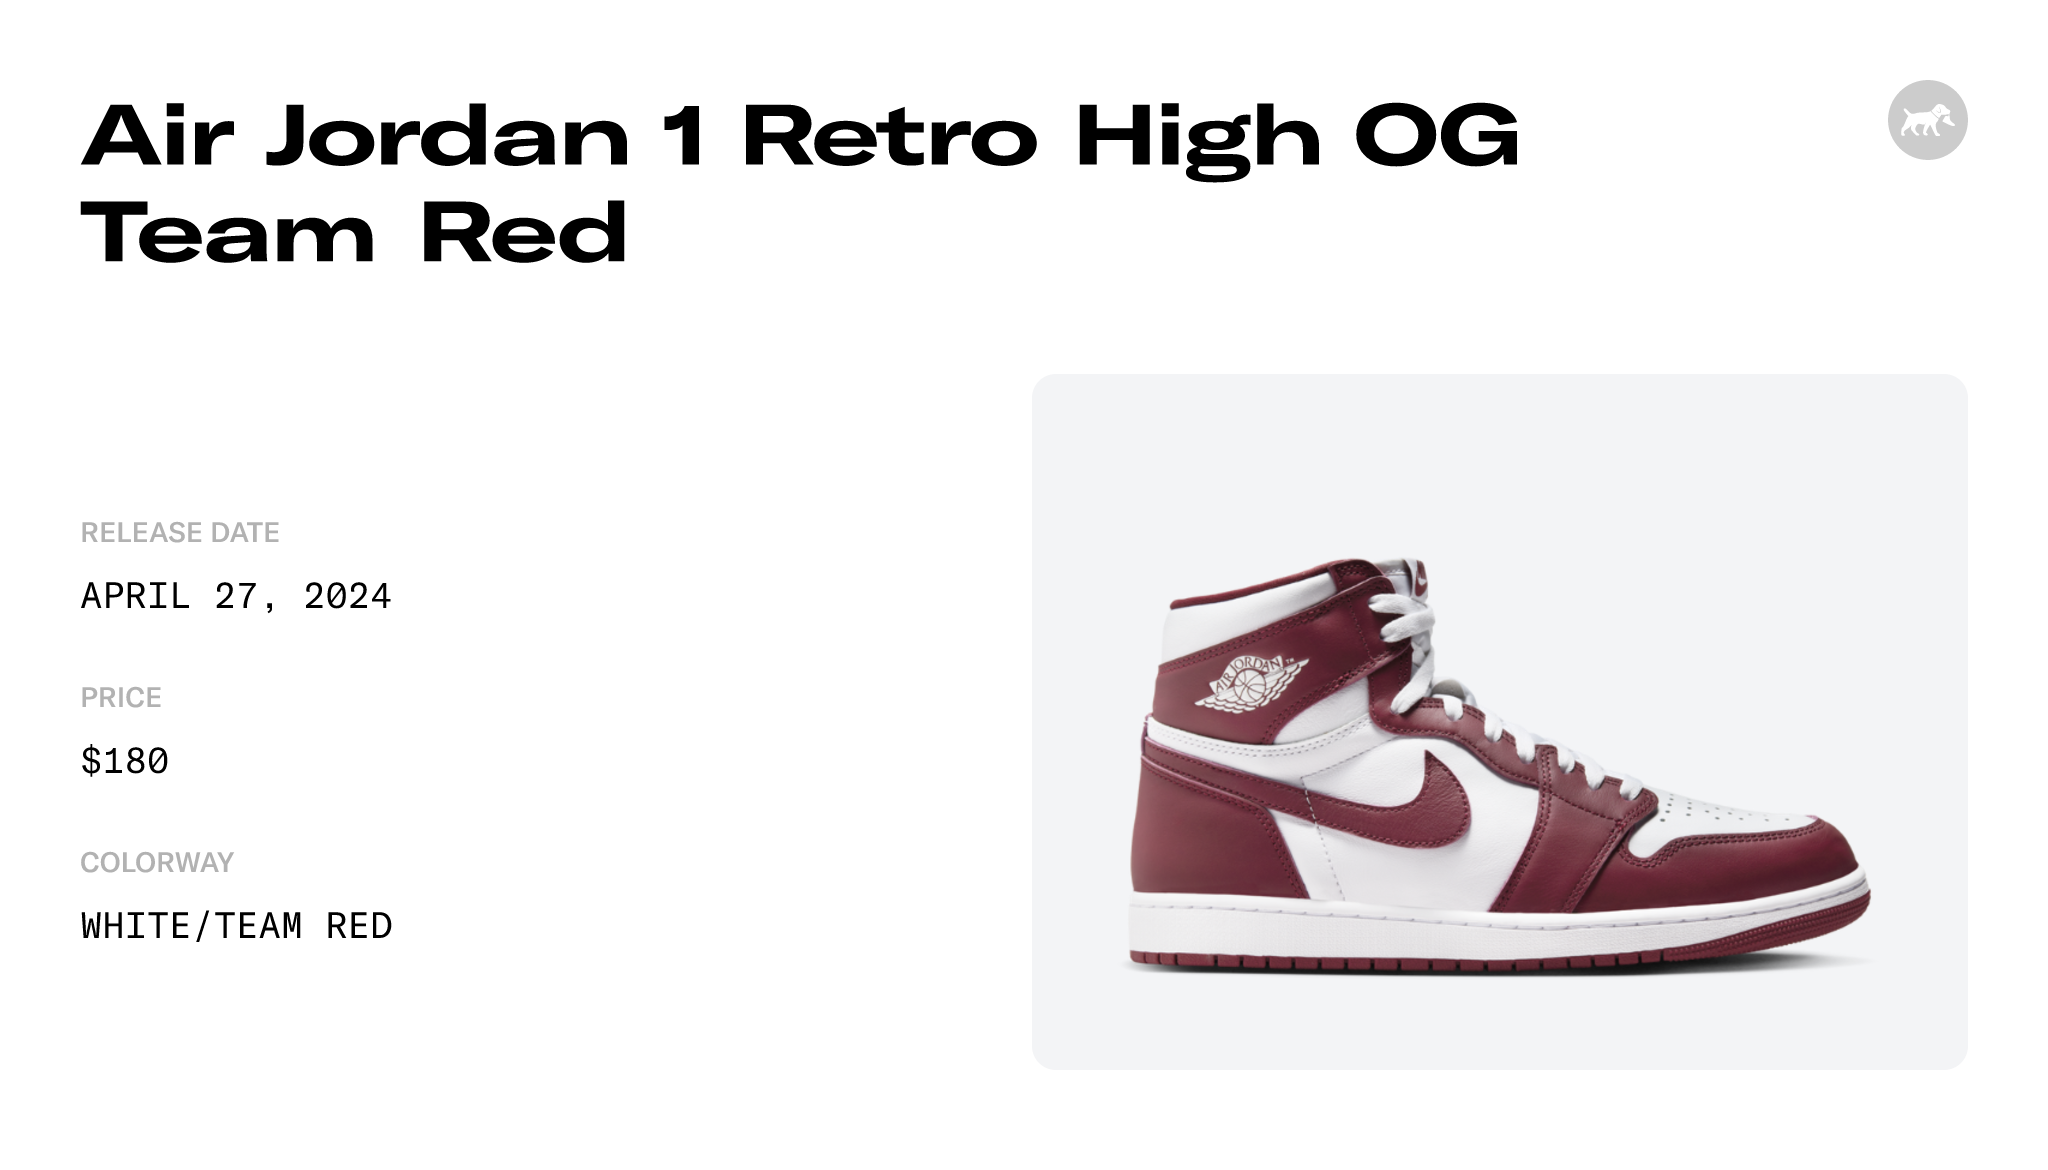 Air Jordan 1 Retro High OG Team Red - DZ5485-160 Raffles and Release Date